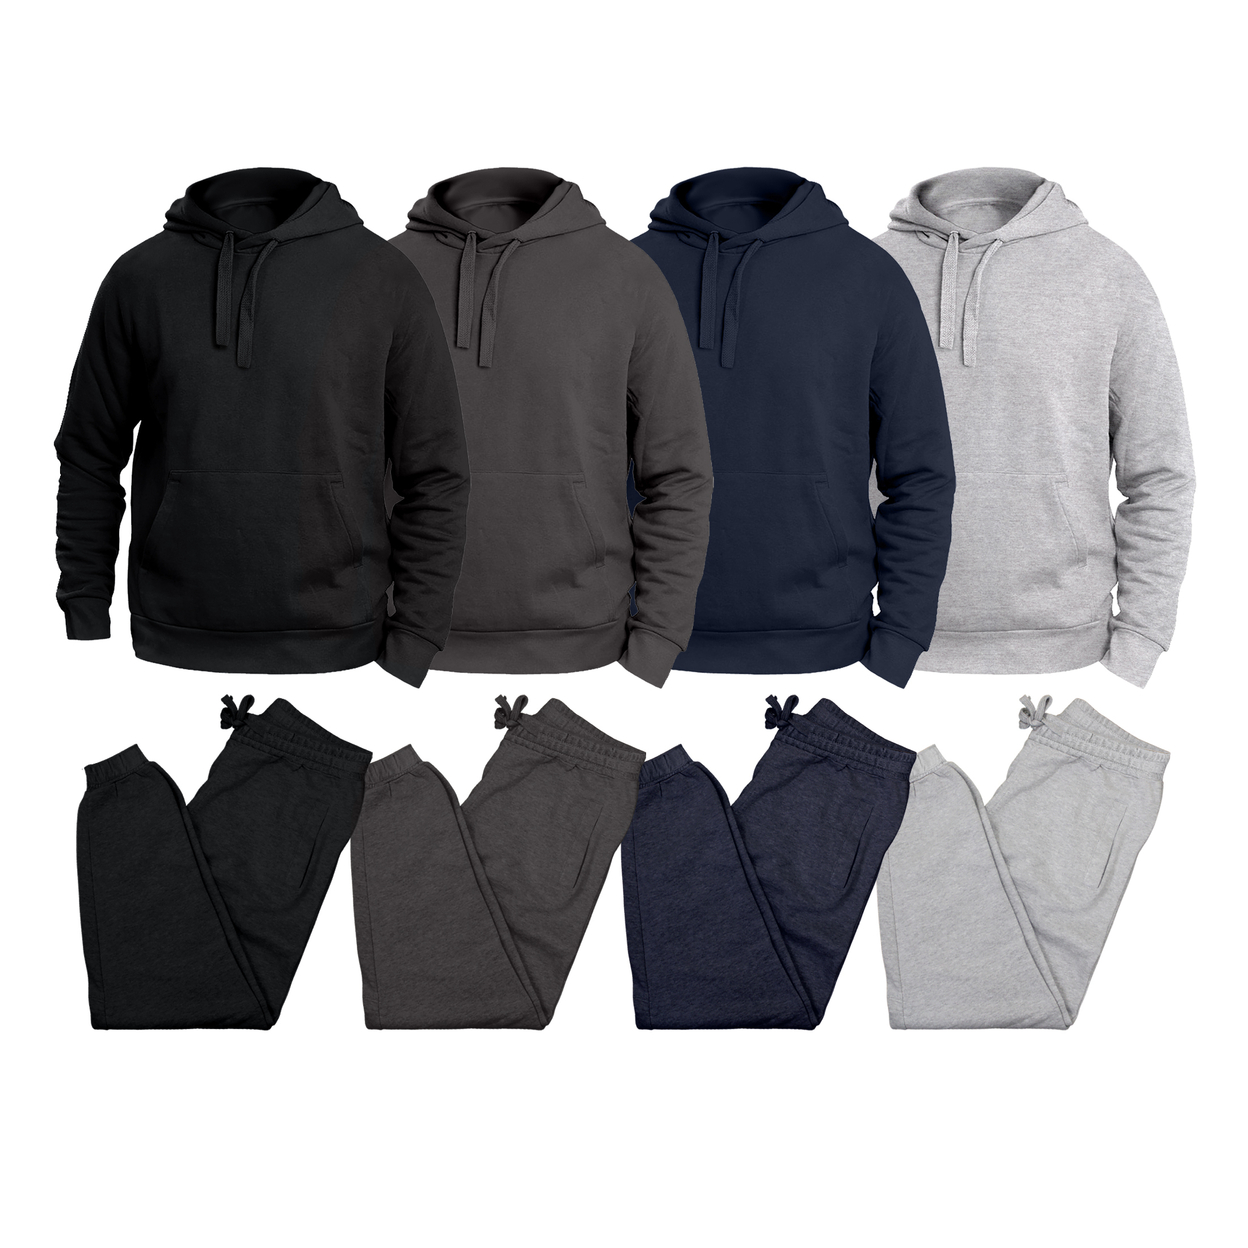 Multi-Pack: Big & Tall Men's Winter Warm Cozy Athletic Fleece Lined Multi-Pocket Cargo Sweatsuit - Grey, 2-pack, 3xl